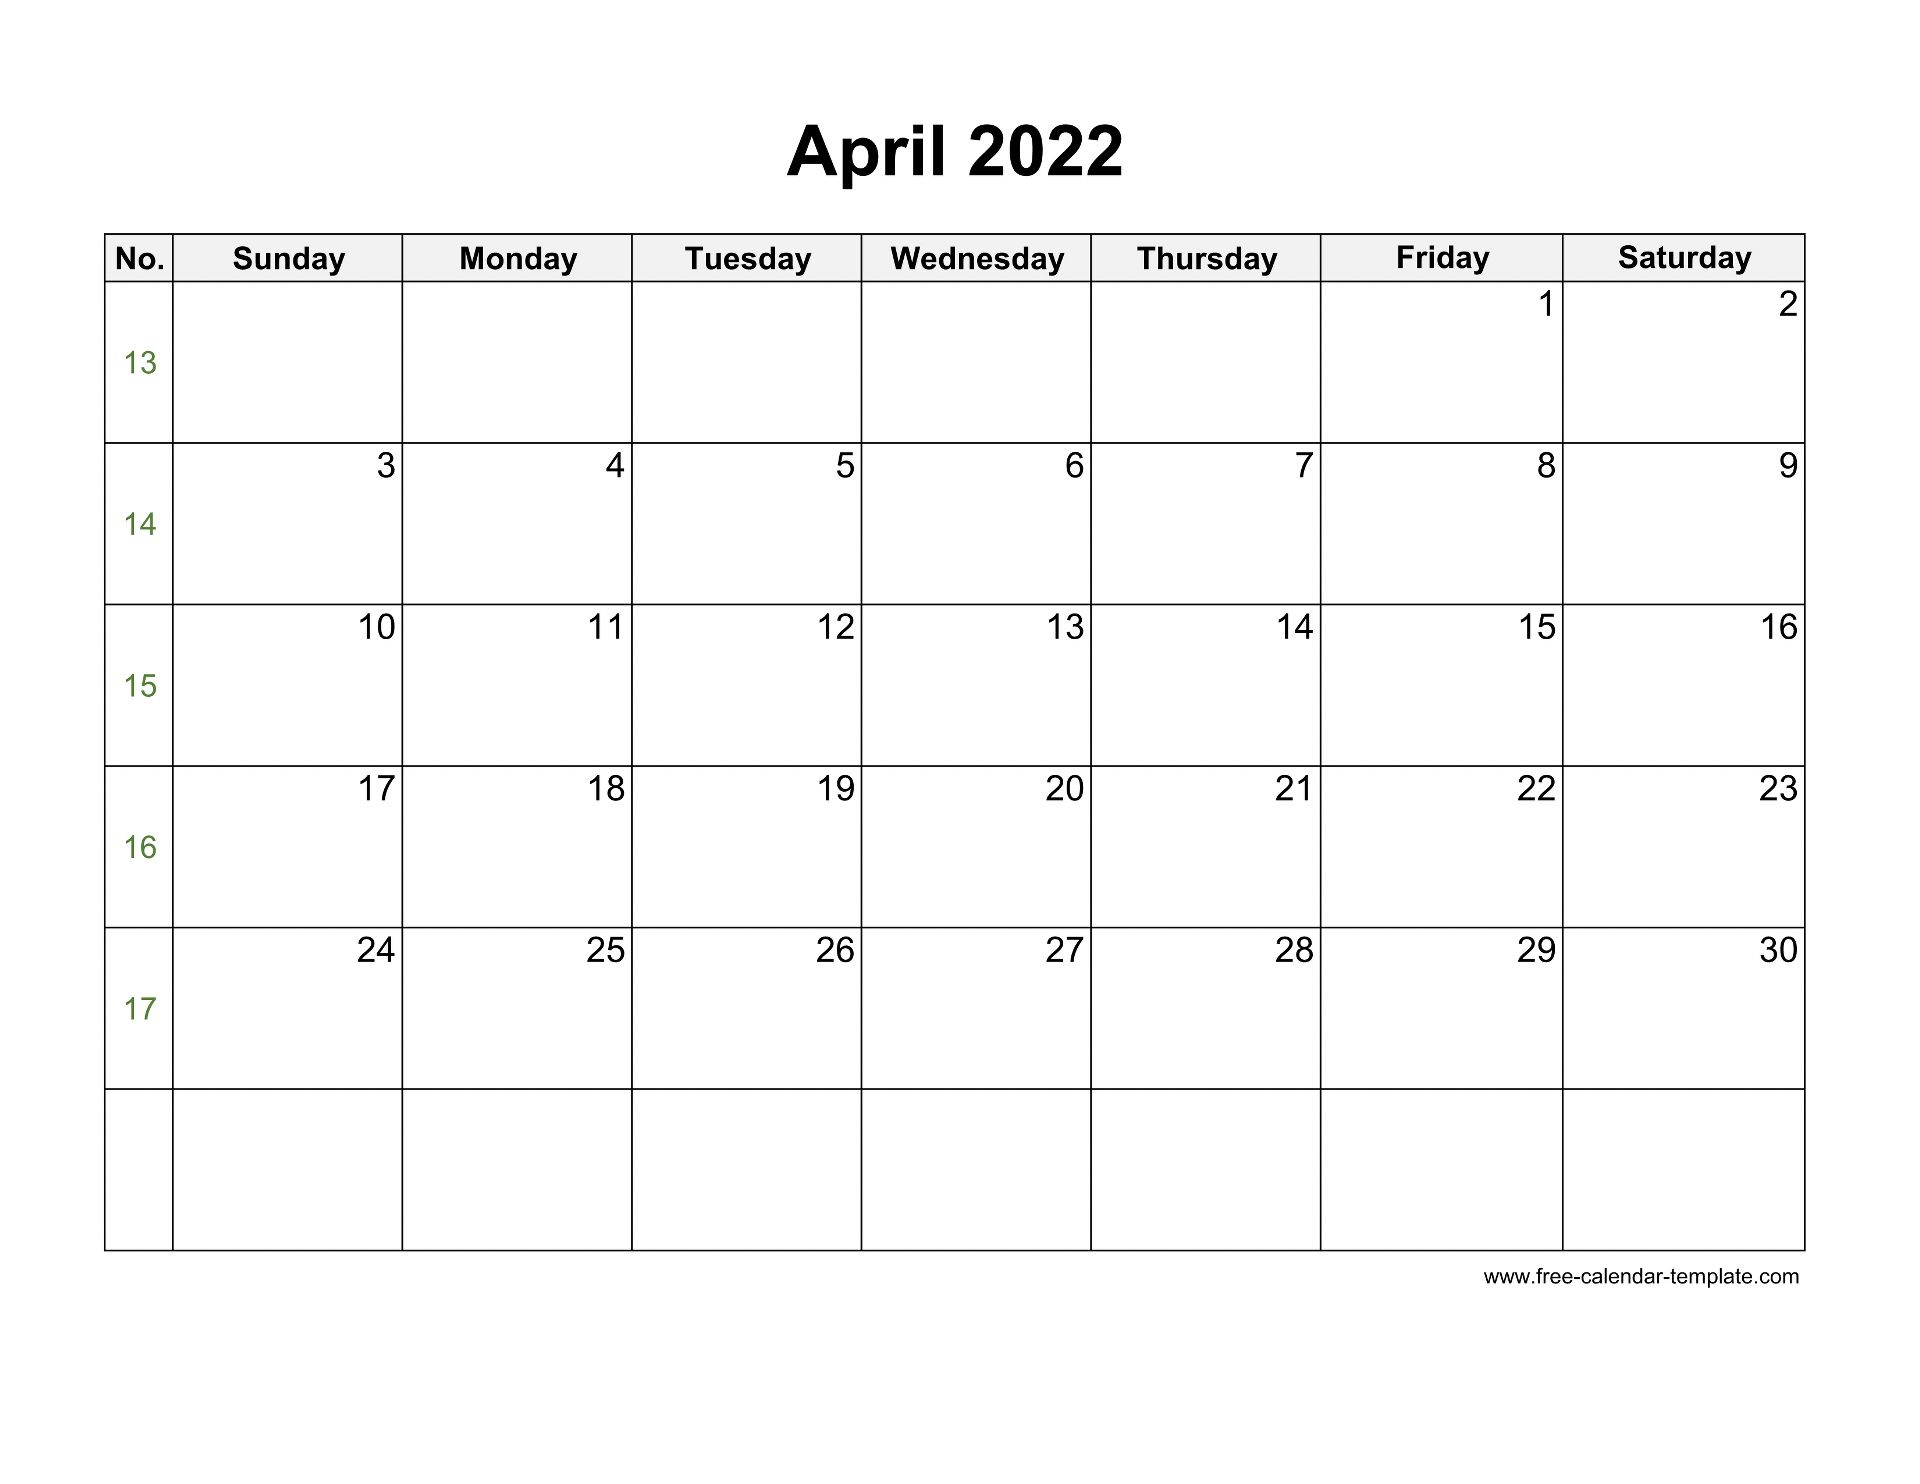 Free 2022 Calendar Blank April Template Horizontal Free Calendar